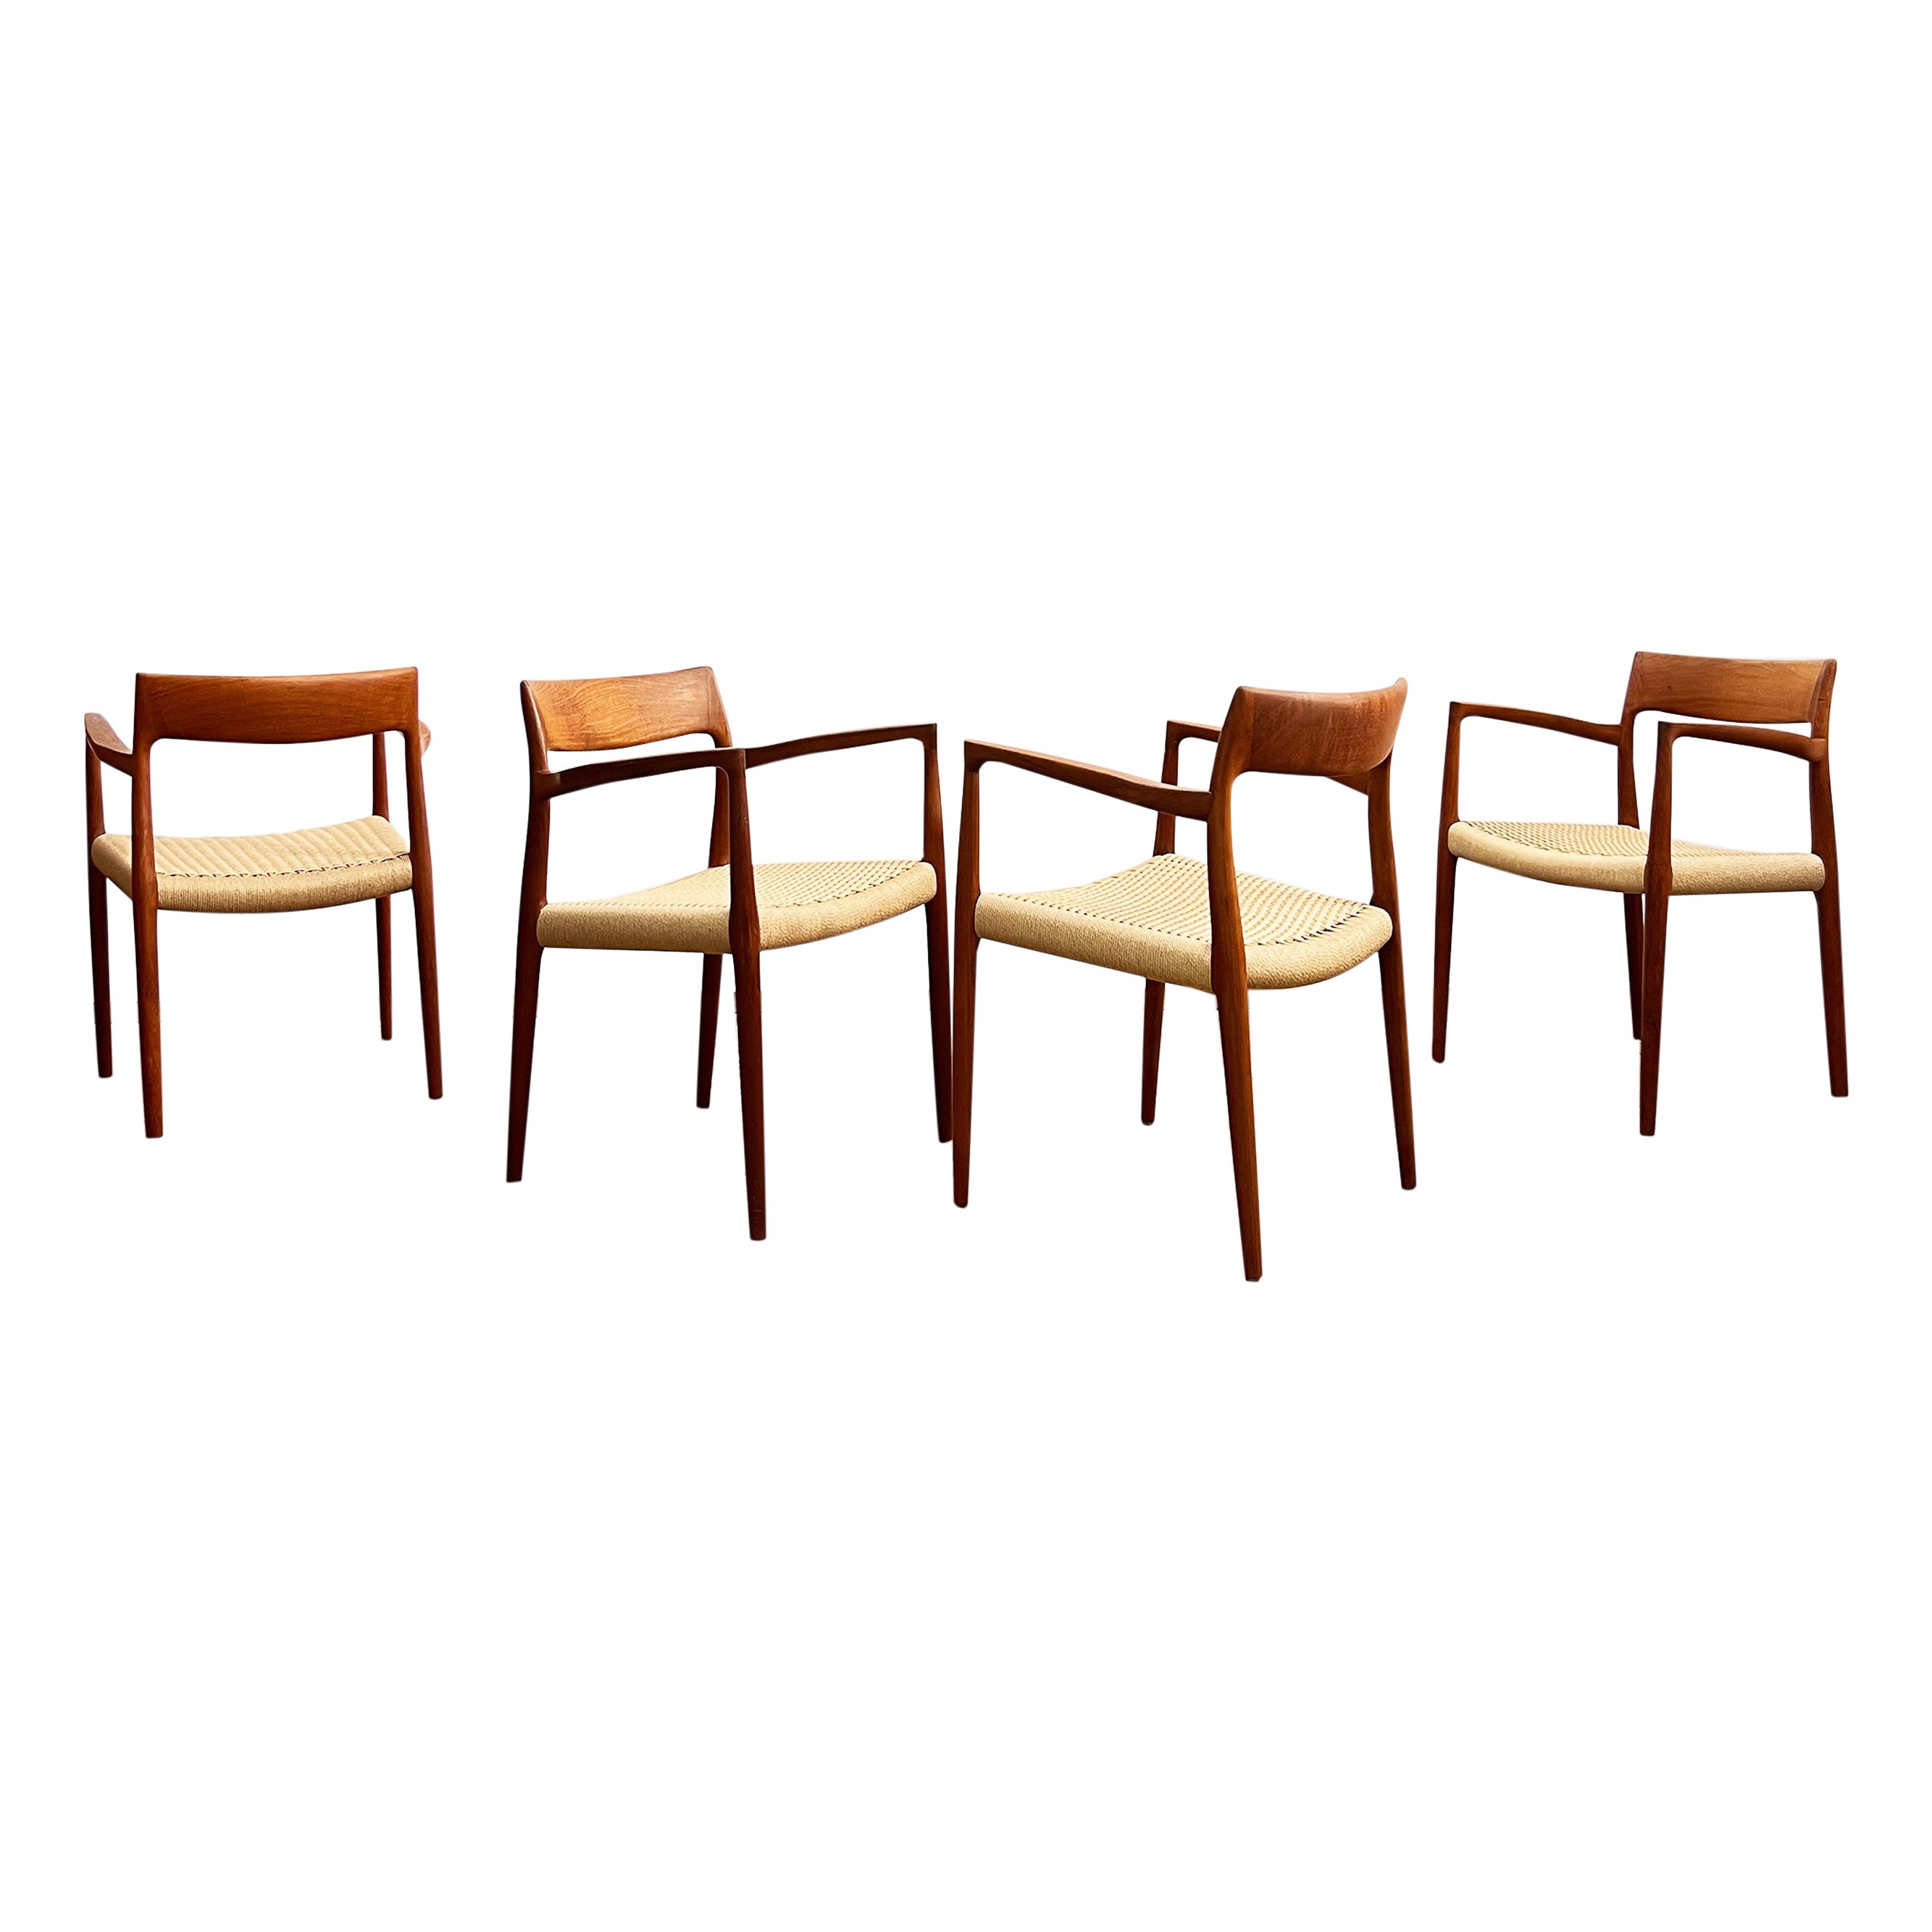 4 Danish Mid-Century Teak Dining Chairs #57 by Niels O. Møller for J. L. Moller